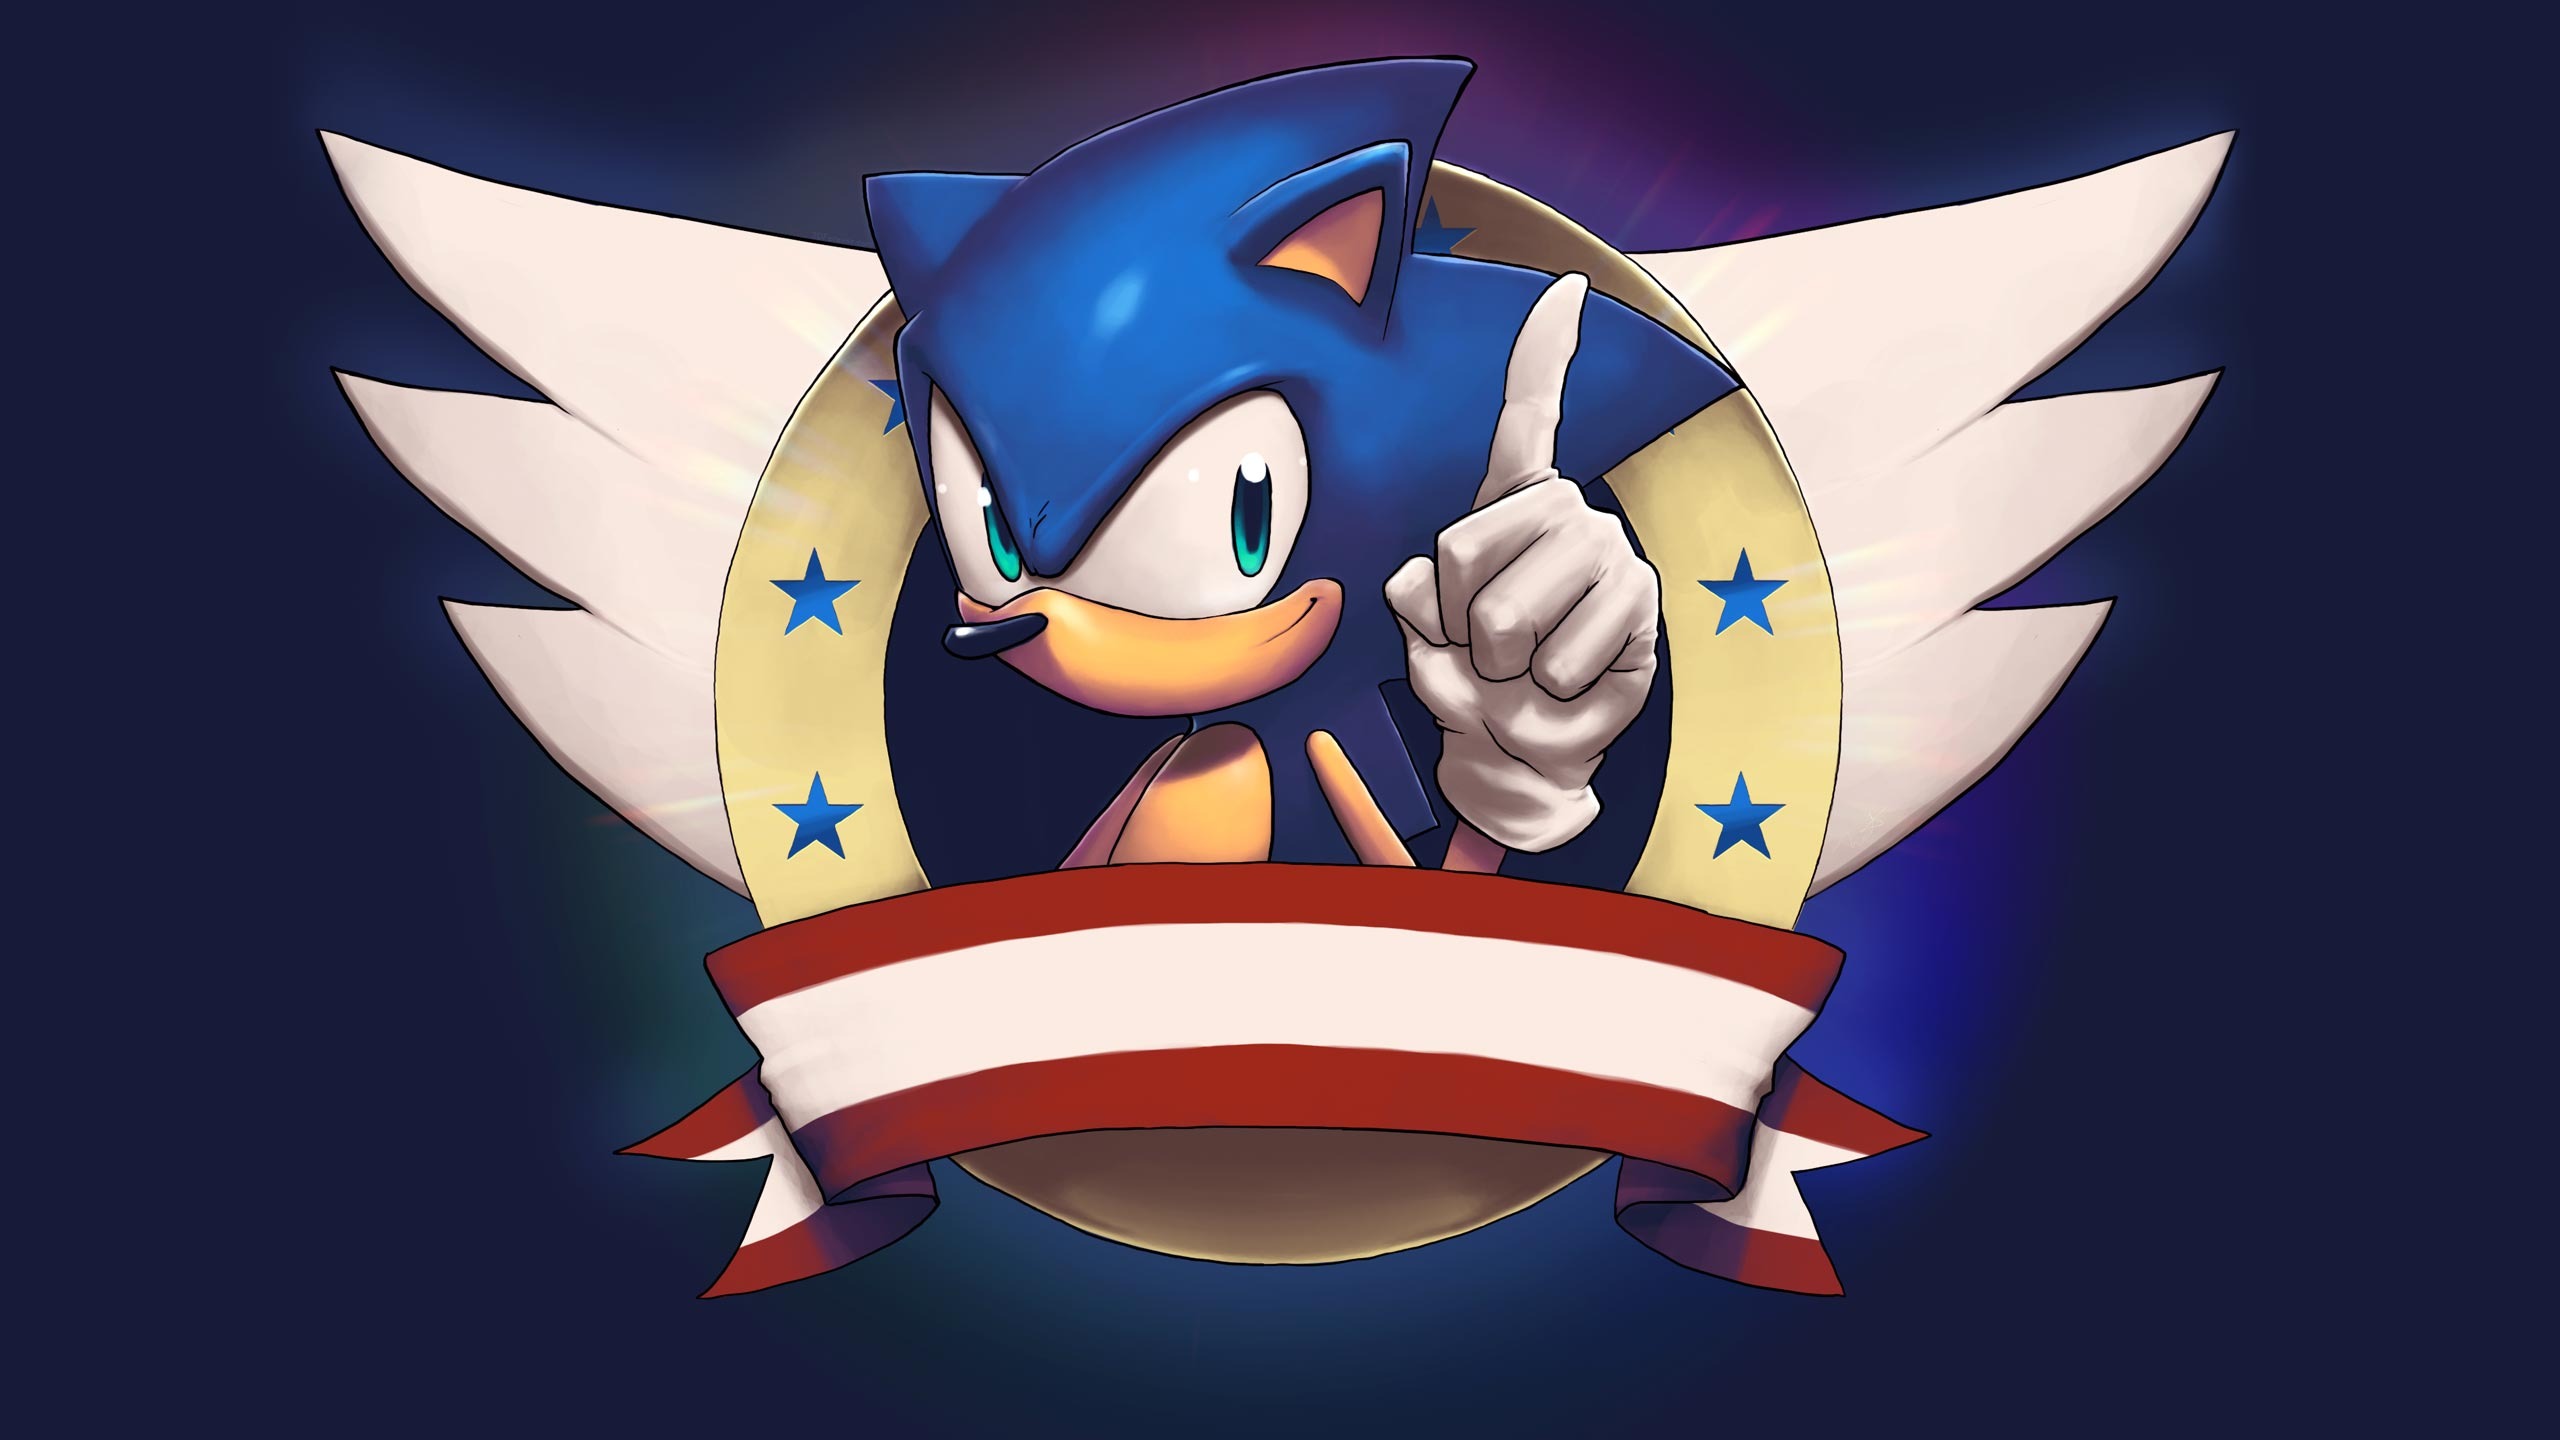 Download Sonic The Hedgehog wallpaper